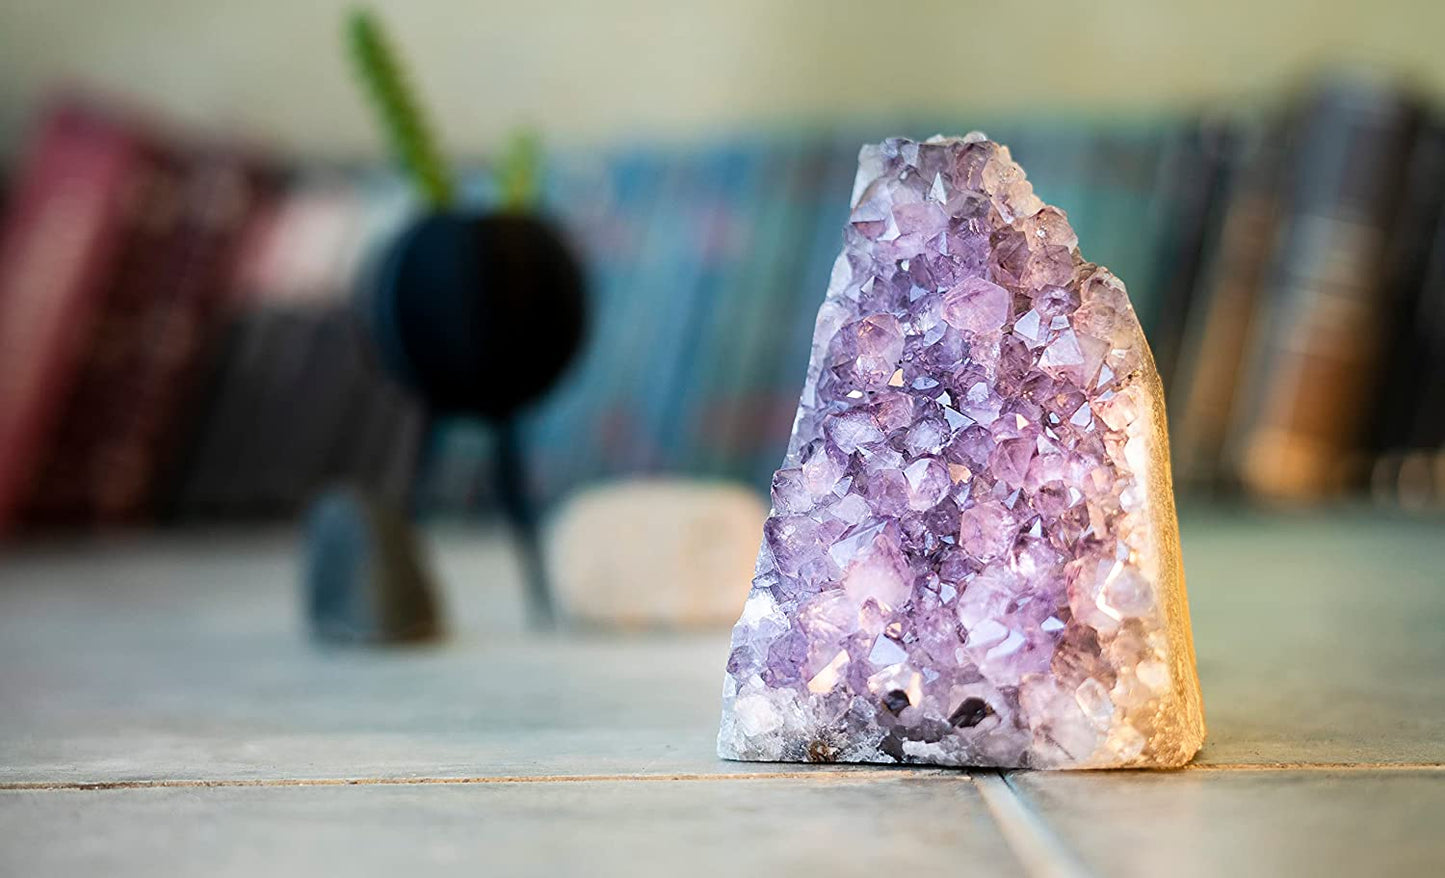 Amethyst Crystal Geode From Uruguay